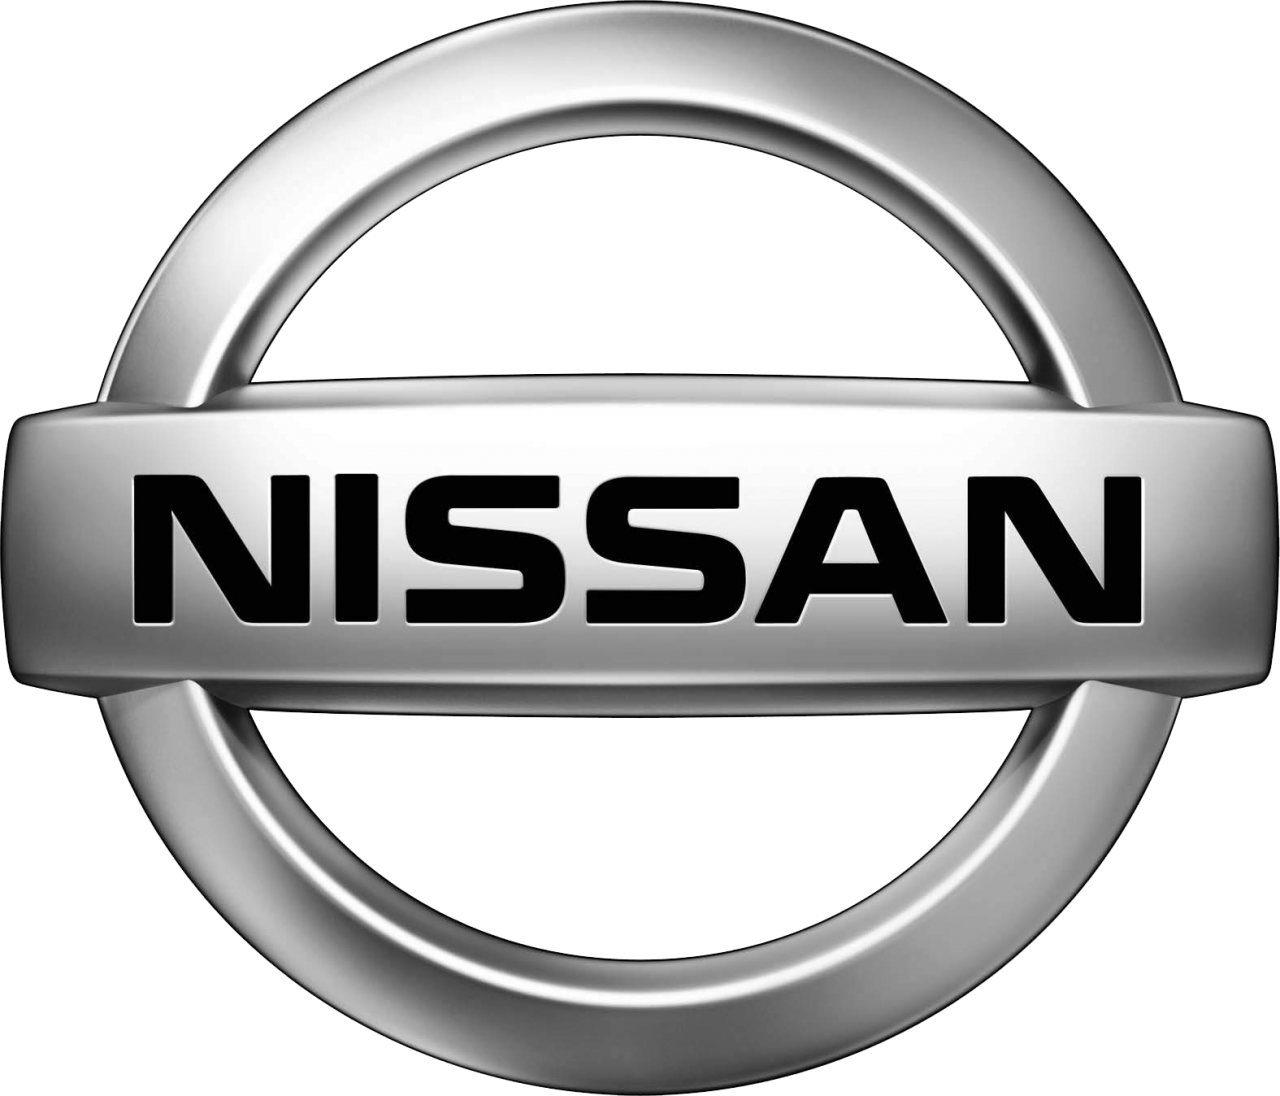 Nissan Logo PNG Image PurePNG Free transparent CC0 PNG Image Library